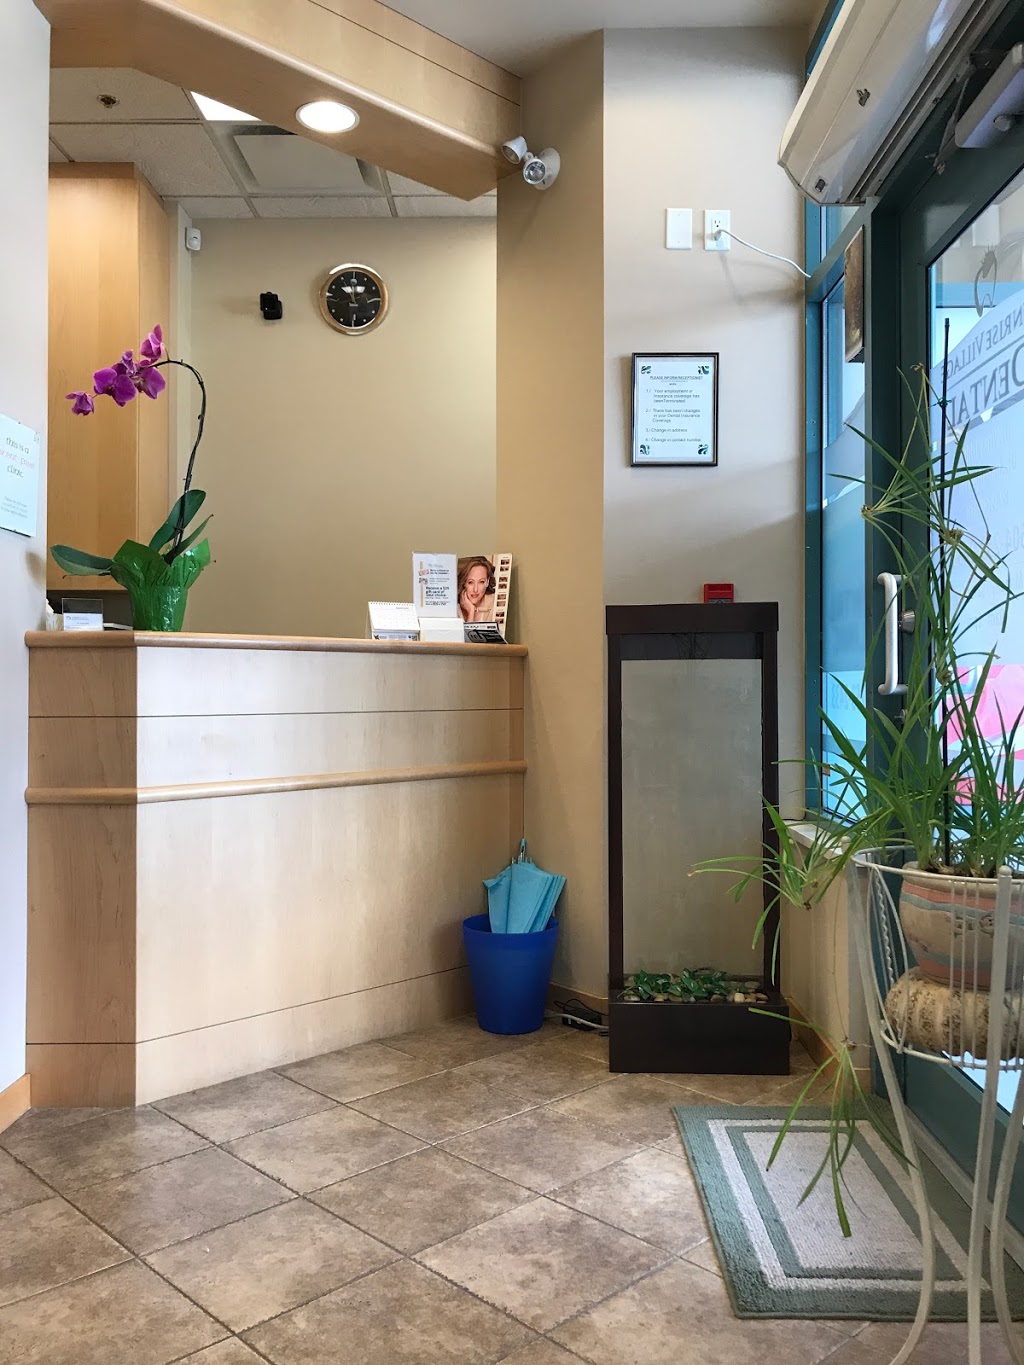 Sunrise Village Dental Centre | 2538 E Hastings St, Vancouver, BC V5K 1Z3, Canada | Phone: (604) 253-2433